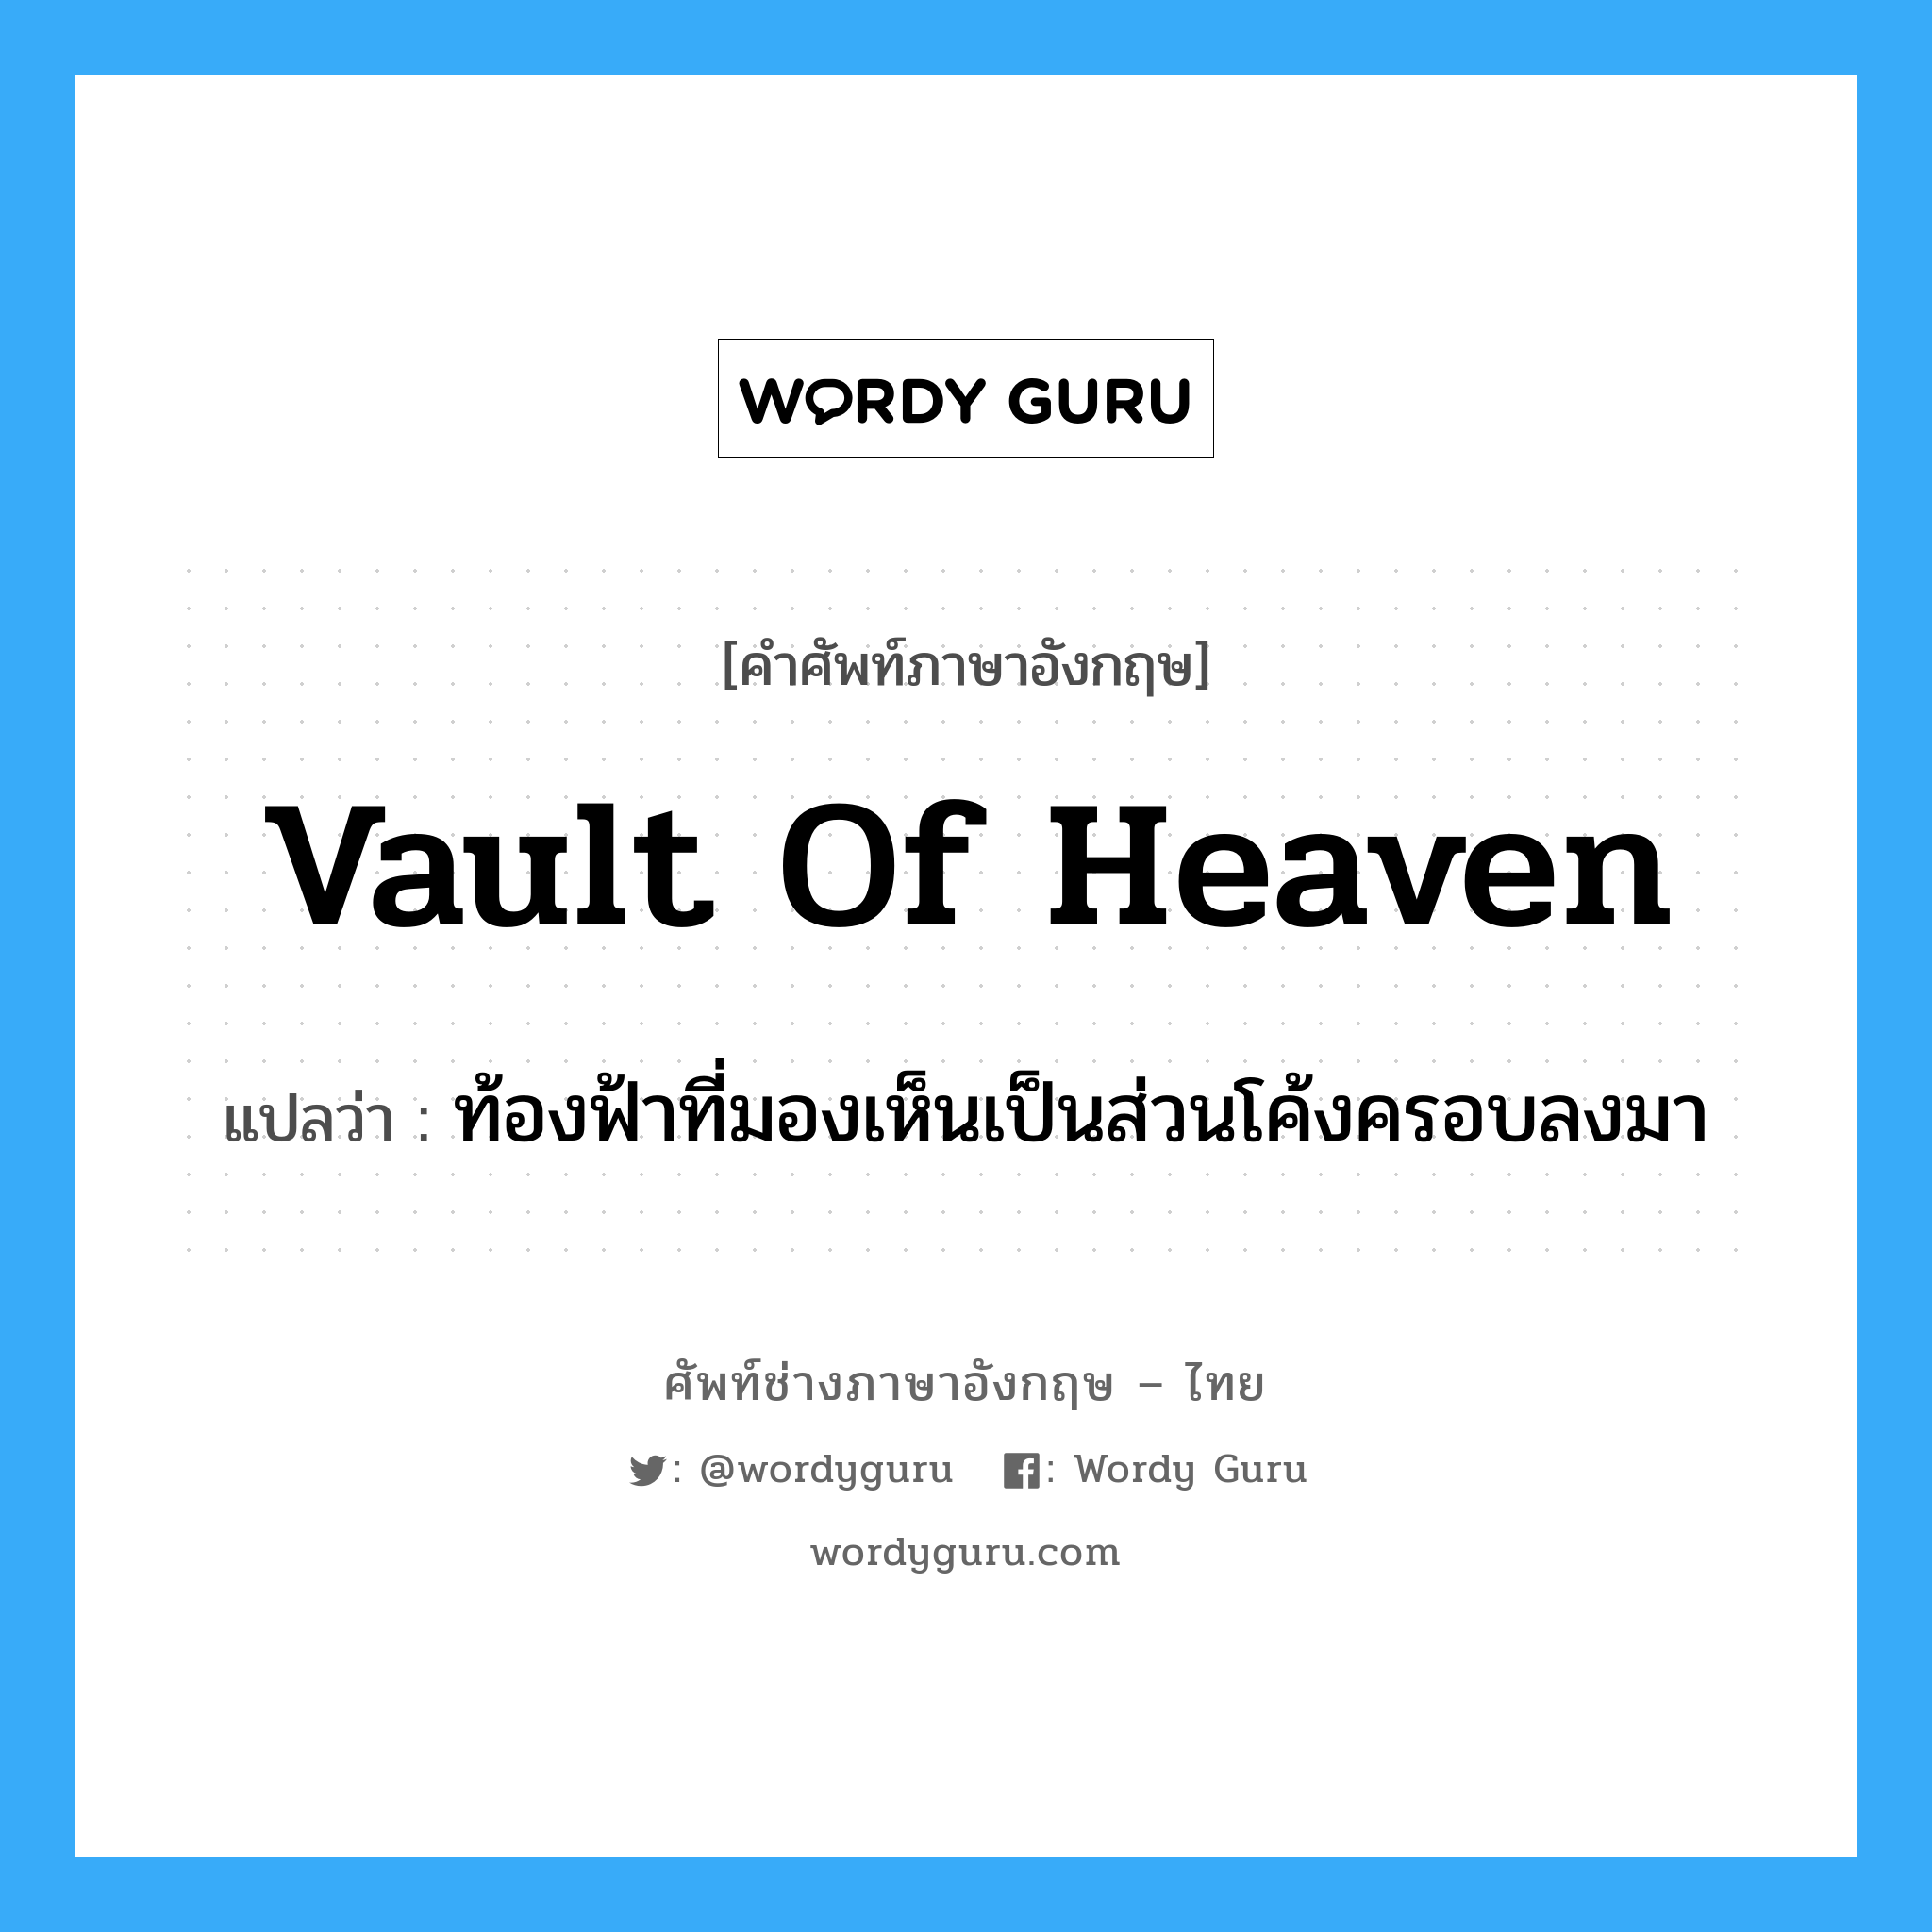 vault of heaven แปลว่า?, คำศัพท์ช่างภาษาอังกฤษ - ไทย vault of heaven คำศัพท์ภาษาอังกฤษ vault of heaven แปลว่า ท้องฟ้าที่มองเห็นเป็นส่วนโค้งครอบลงมา